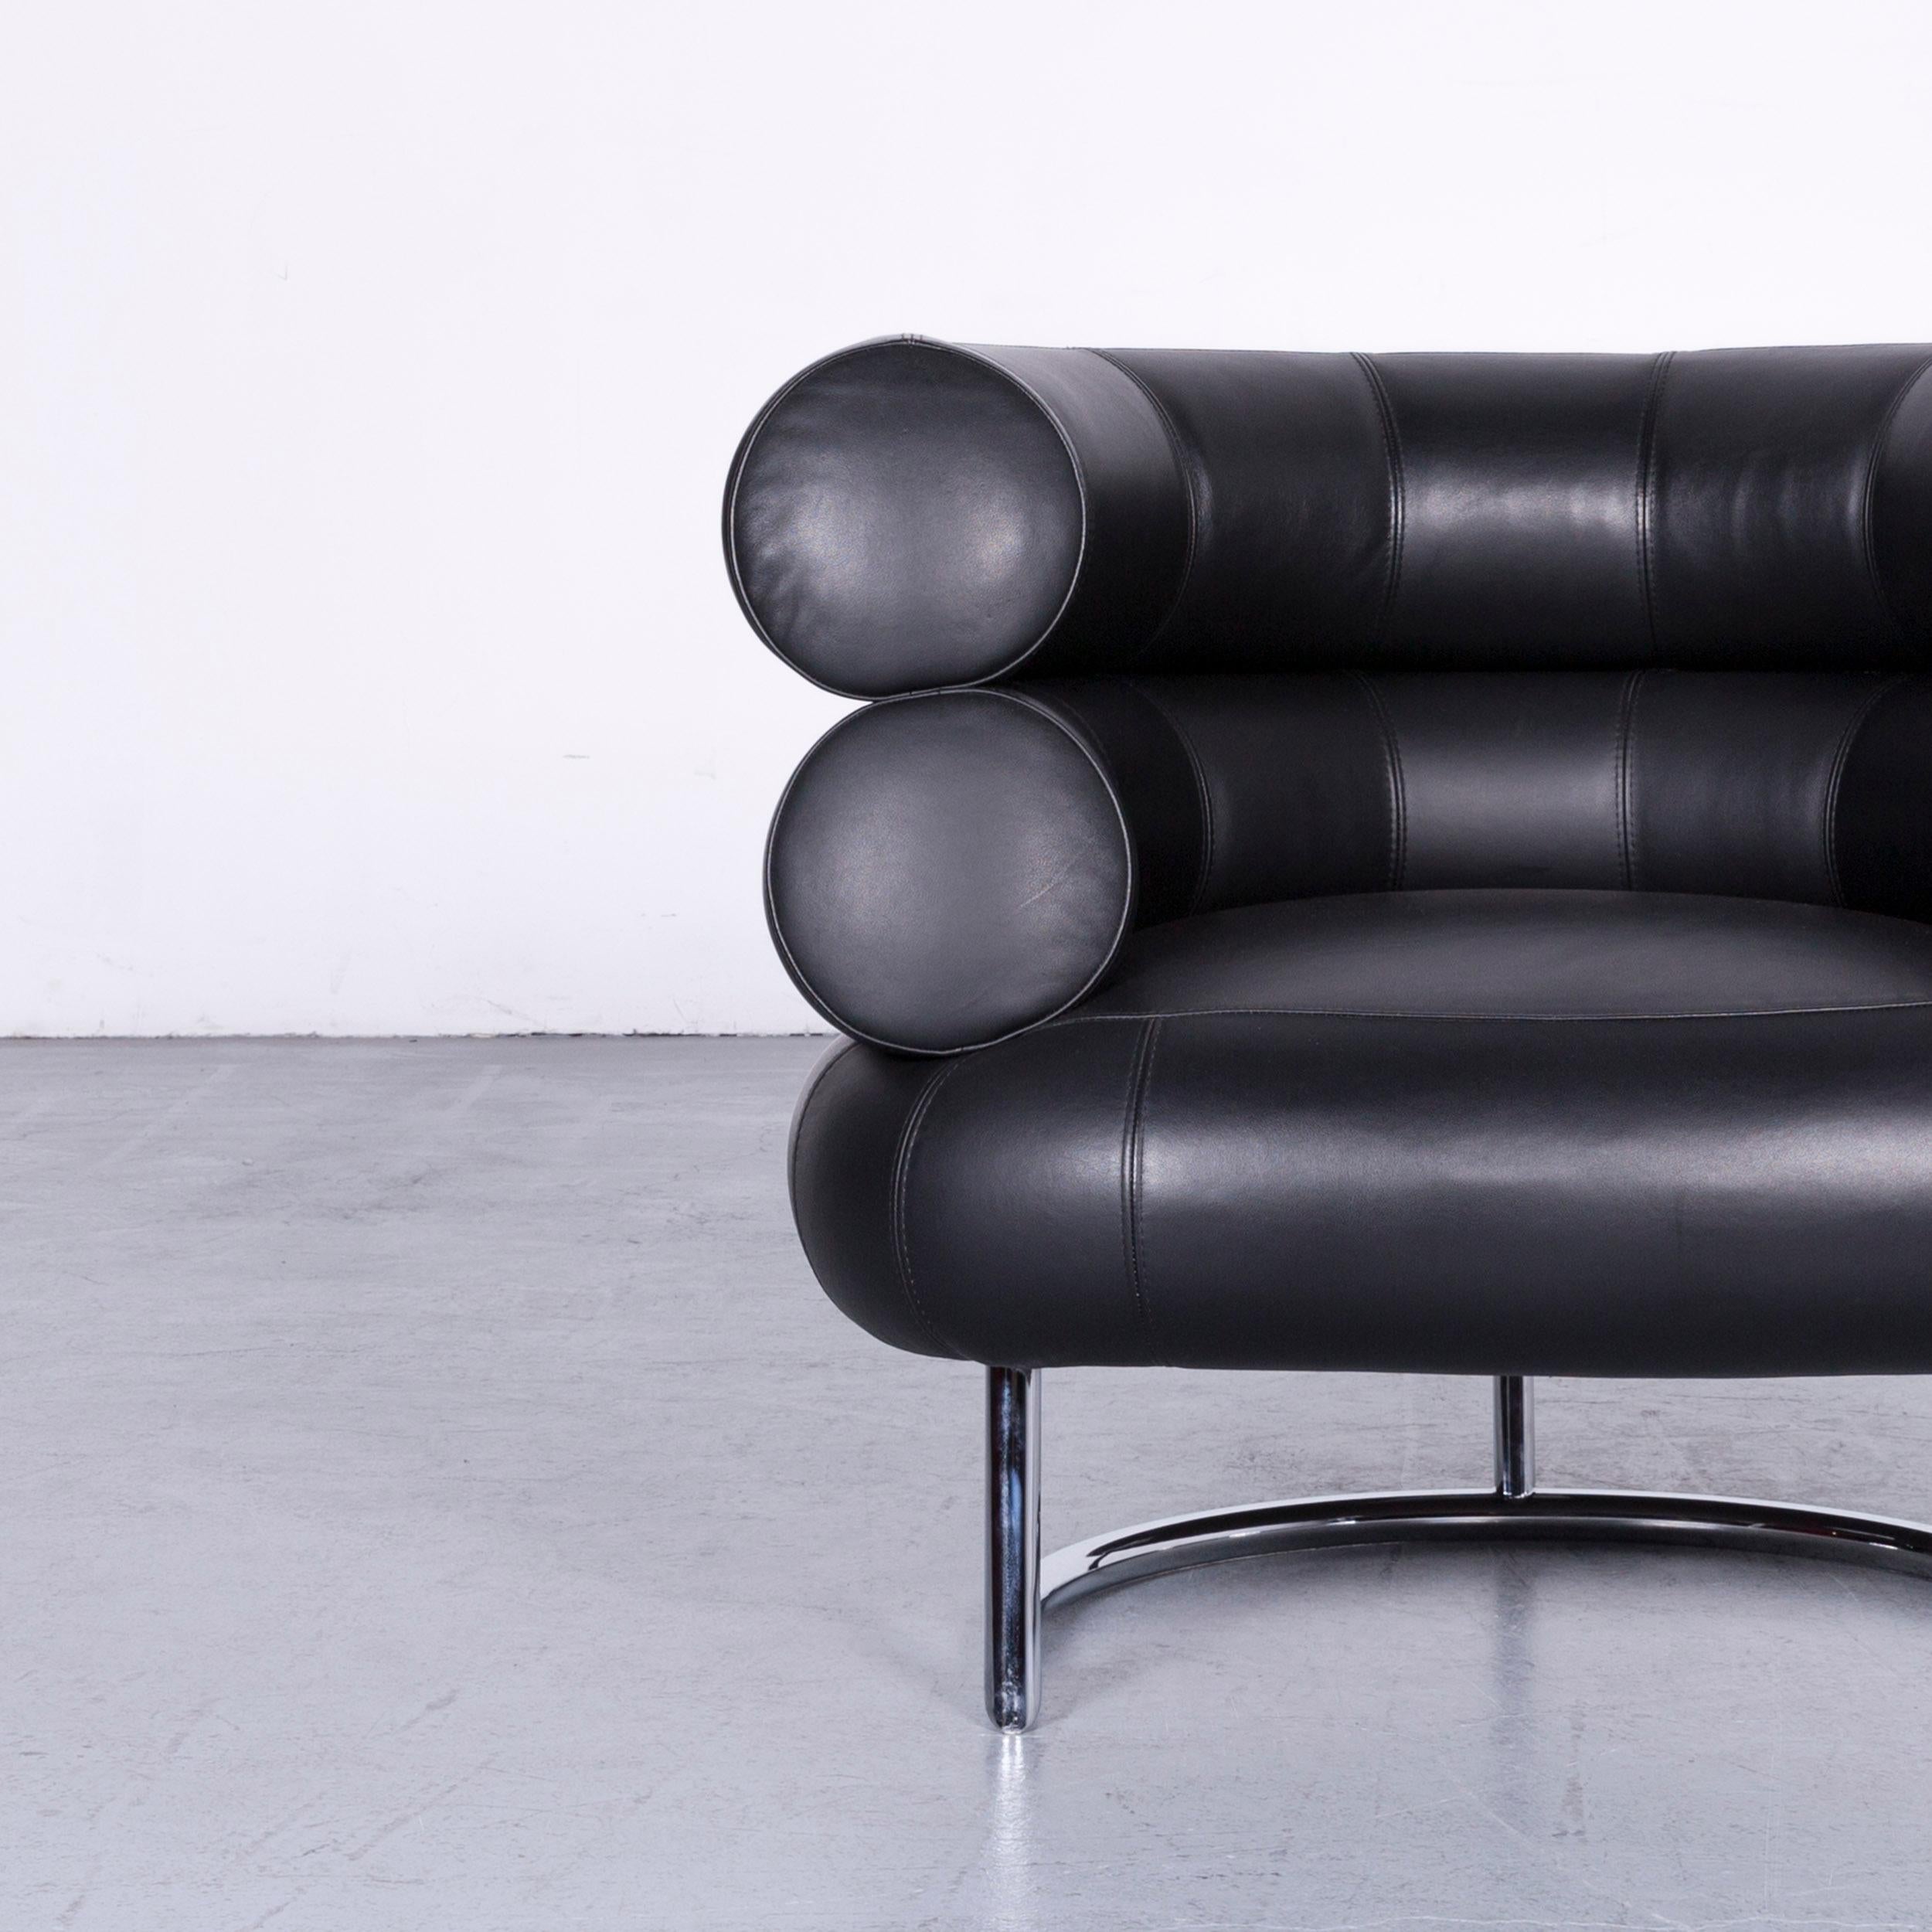 German ClassiCon Bibendum Chair Designer Leather Armchair Black For Sale